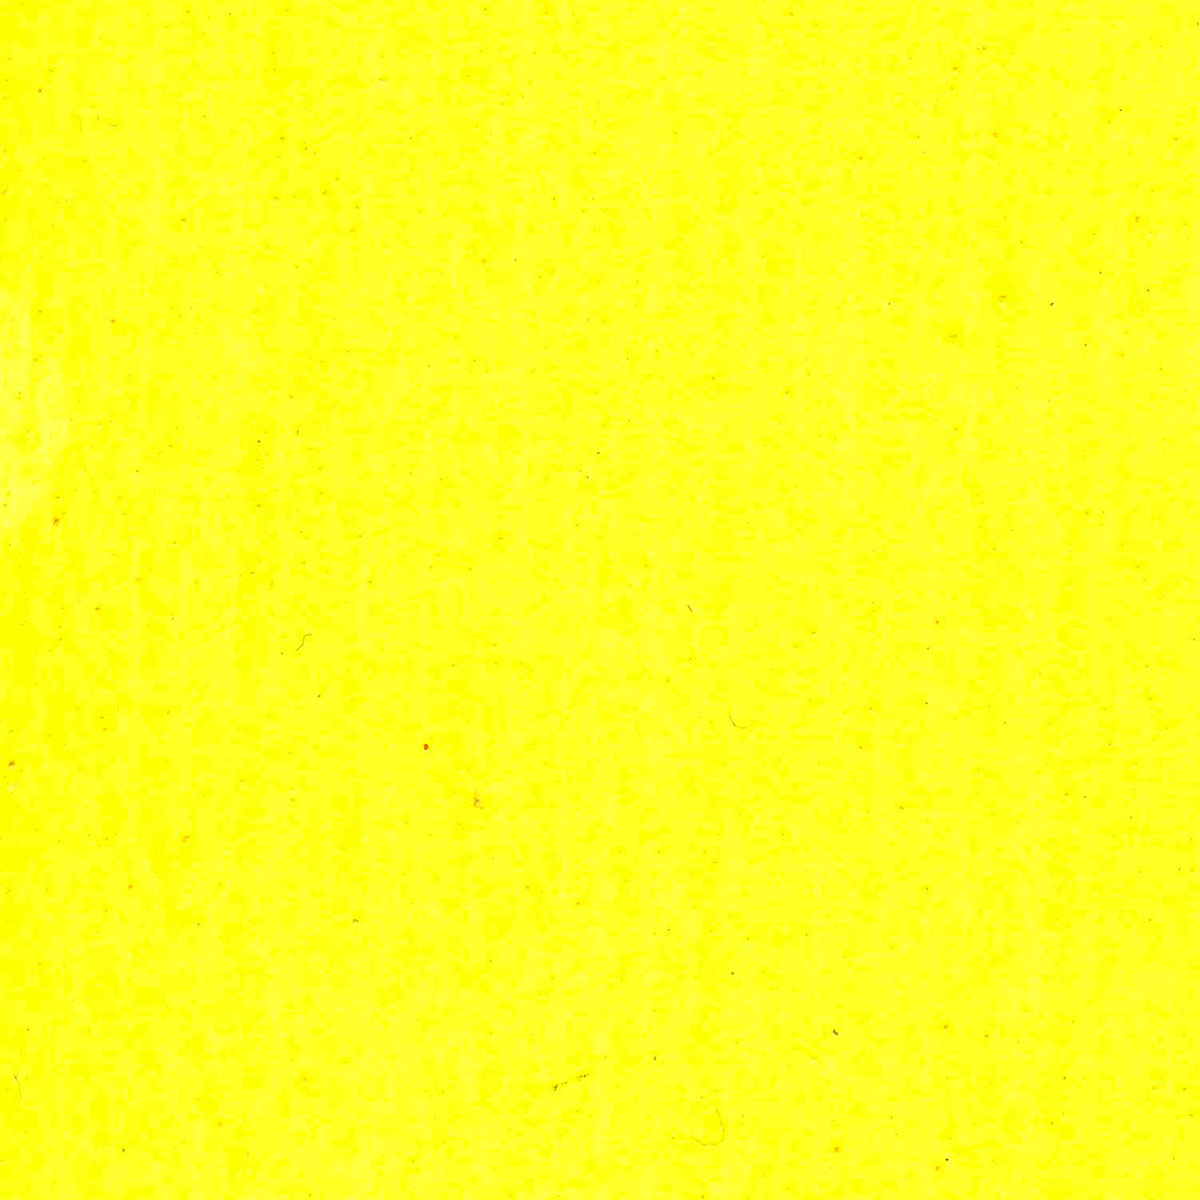 Naples yellow - ColourLex